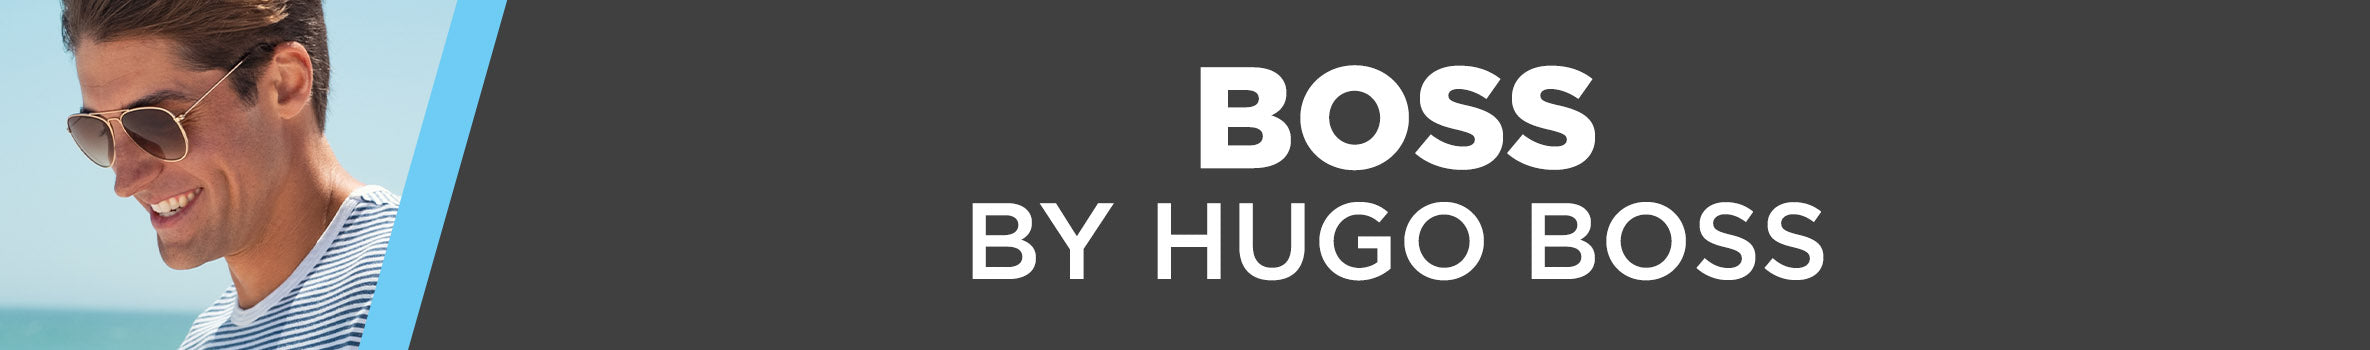 BOSS by HUGO BOSS